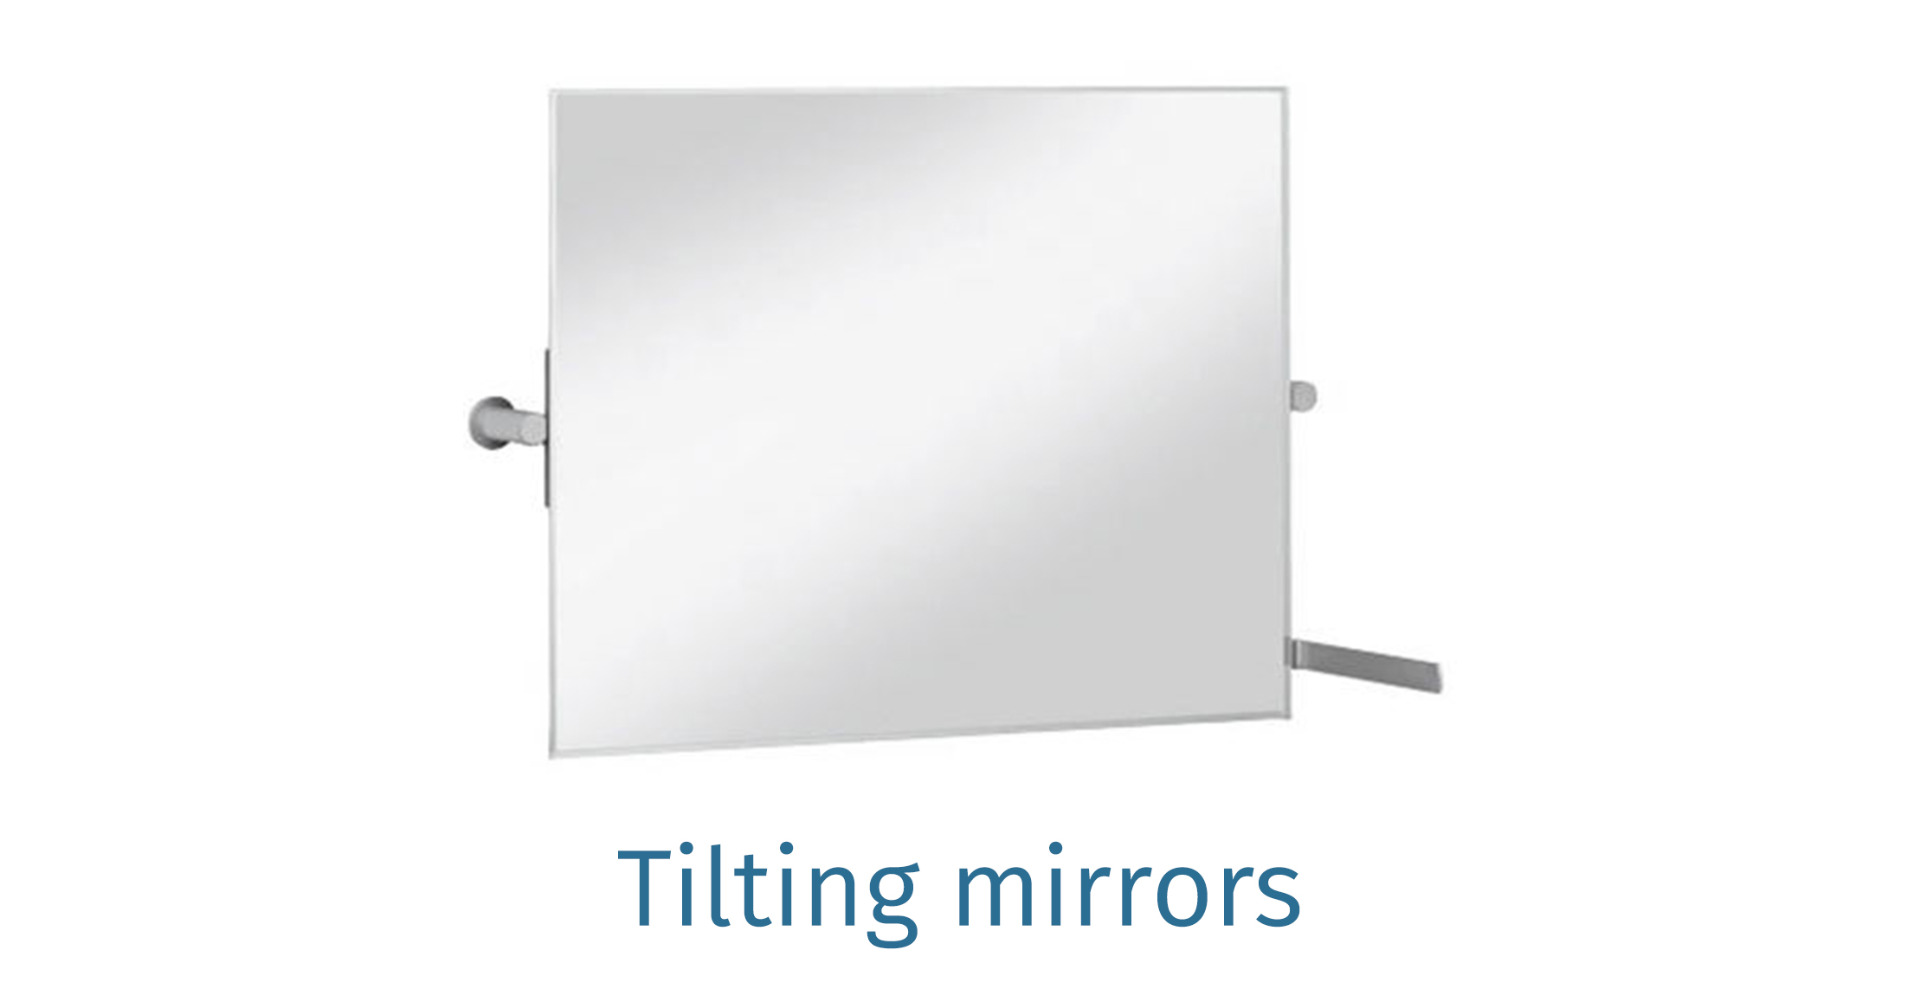 Tilting mirrors